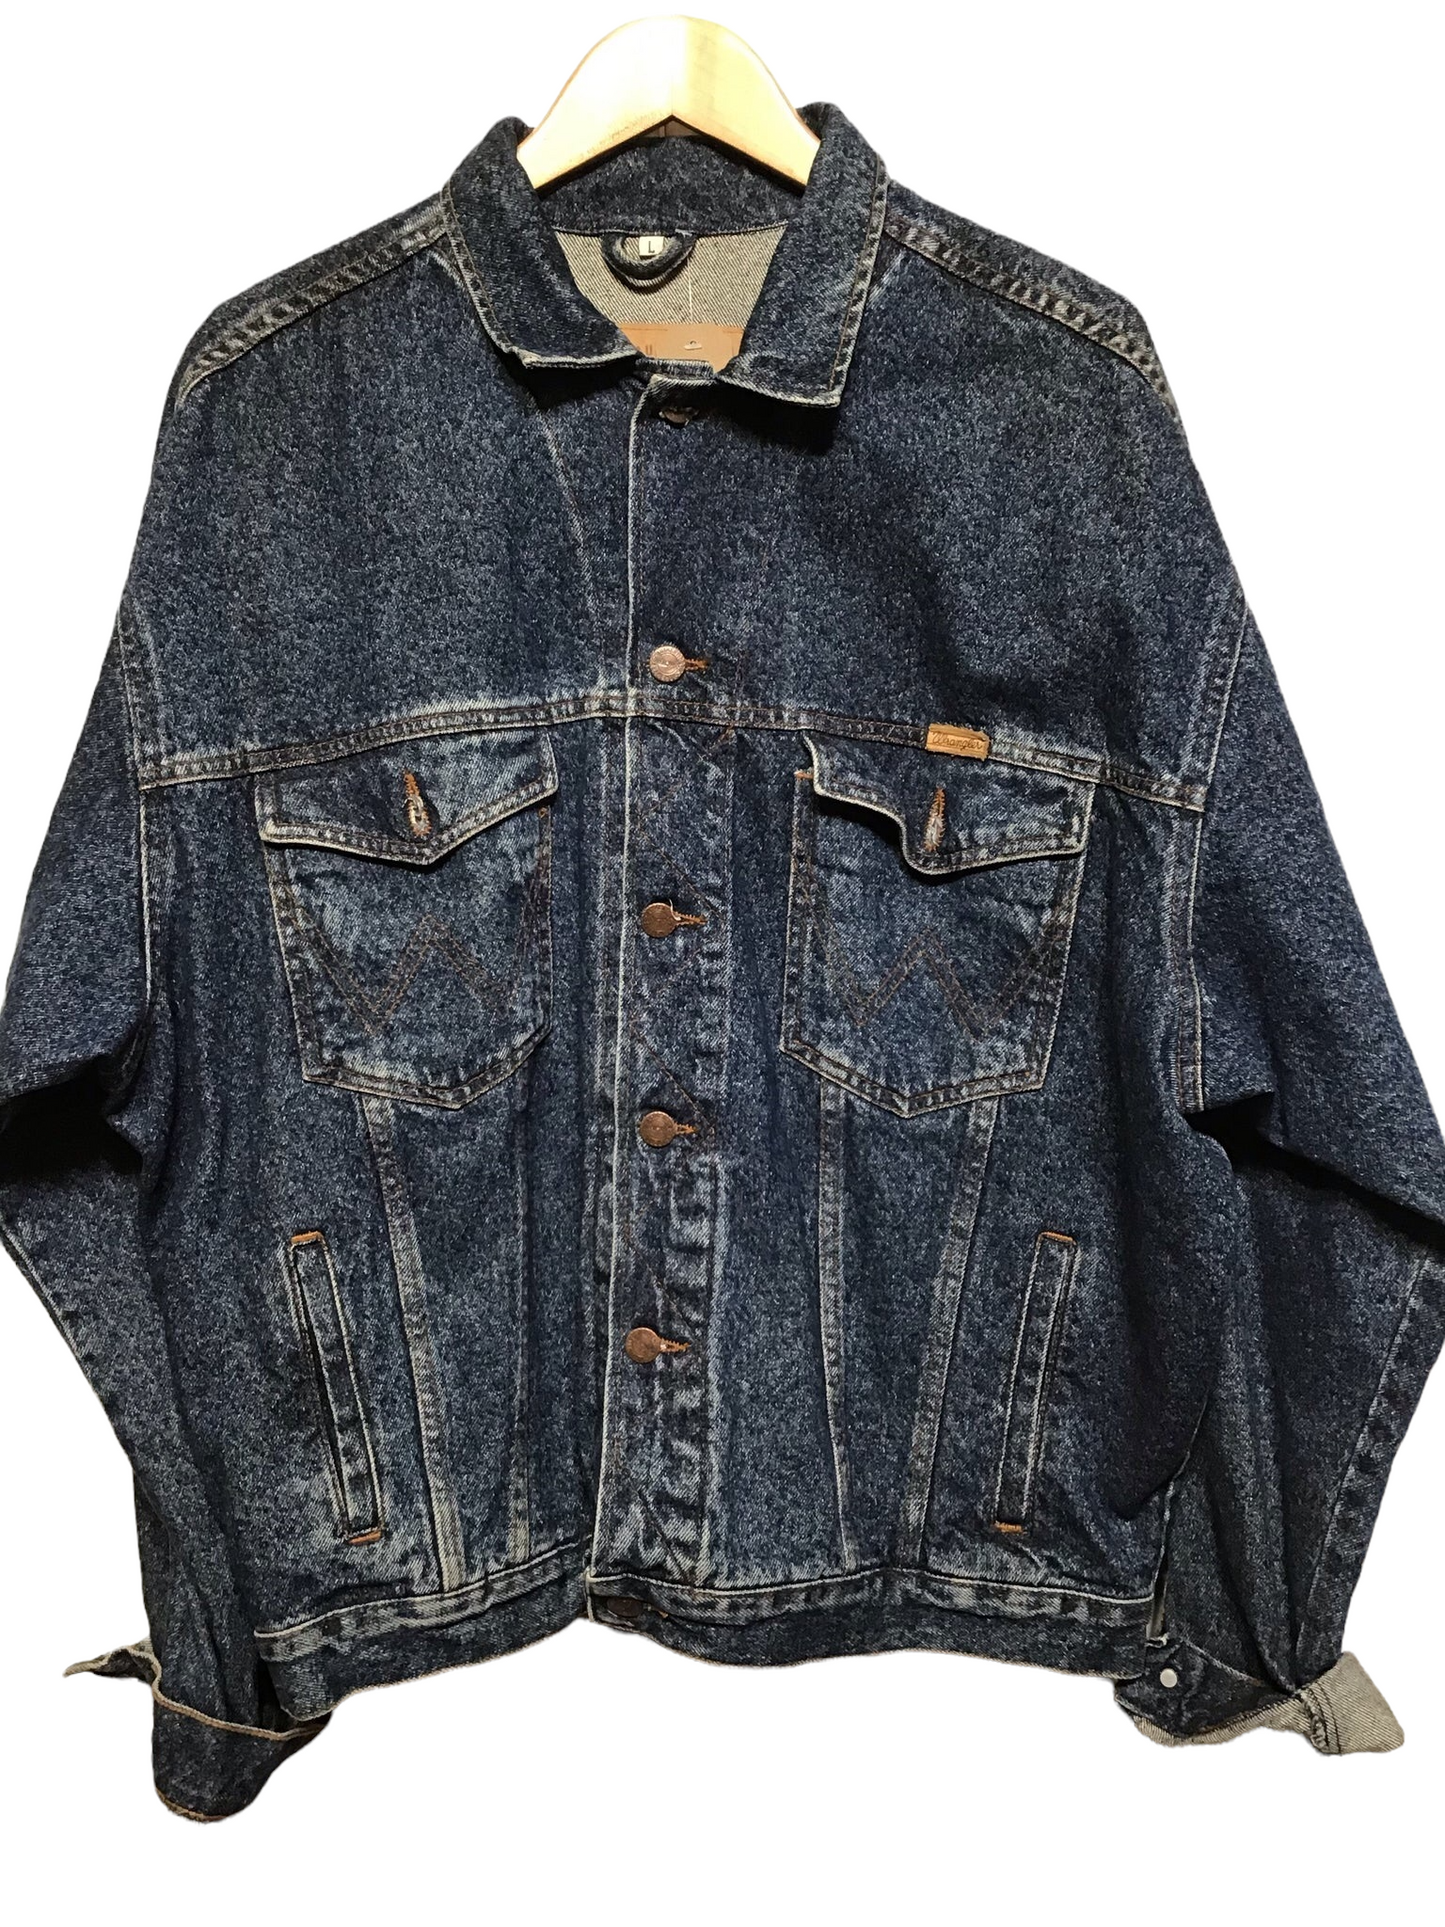 Wrangler Denim Jacket (Size L)